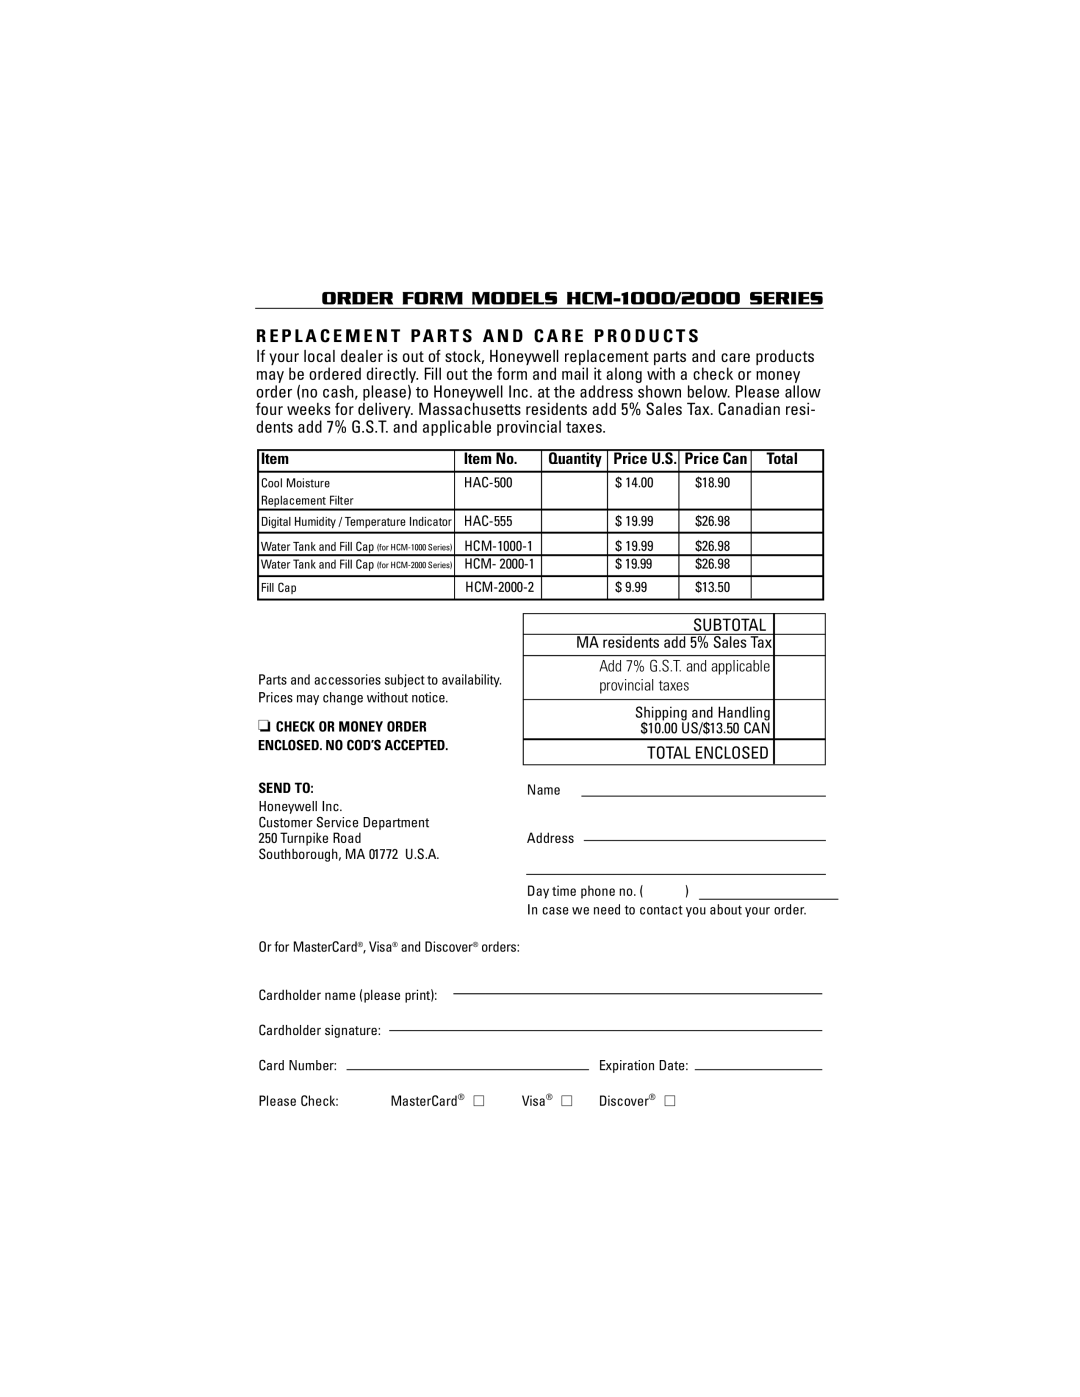 Honeywell HCM-2000 owner manual ORDER FORM MODELS HCM-1000/2000SERIES, Subtotal, Total Enclosed, Item No 